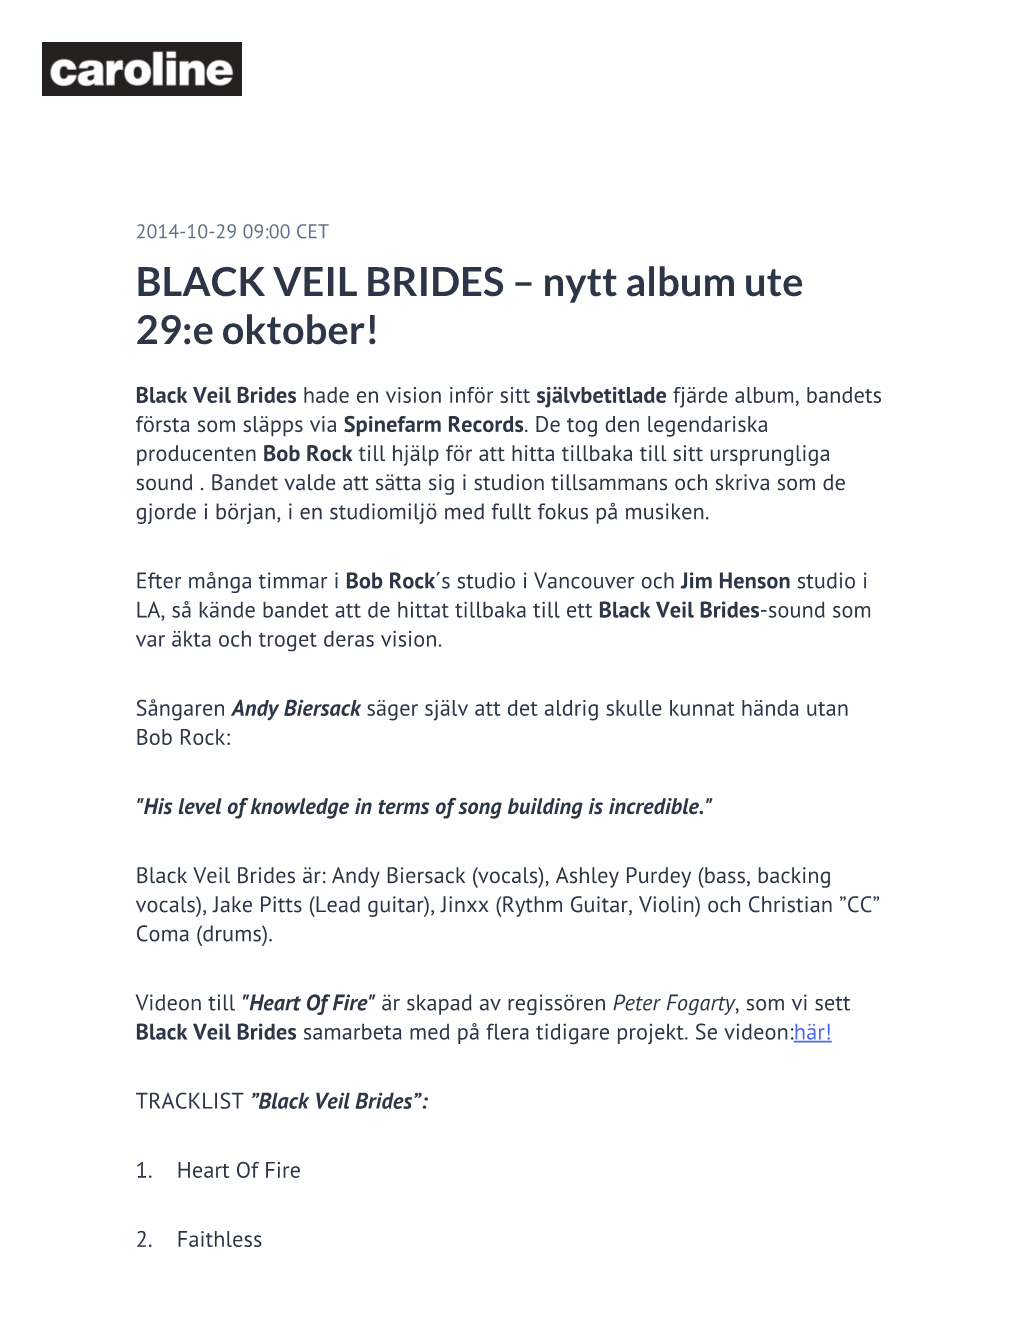 BLACK VEIL BRIDES – Nytt Album Ute 29:E Oktober!